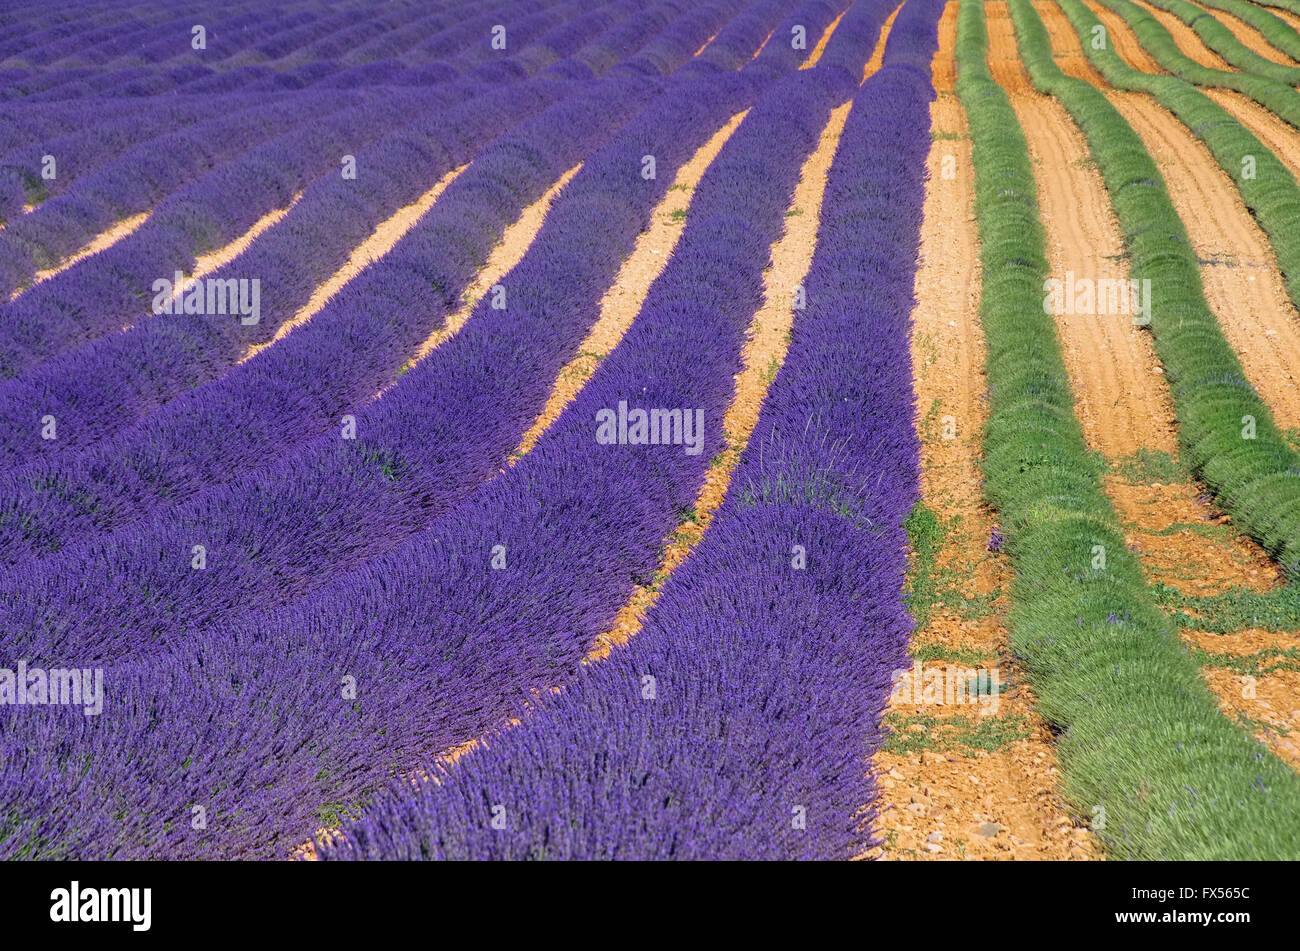 Ernte Lavendelfeld - lavanda cosecha de campo 02 Foto de stock